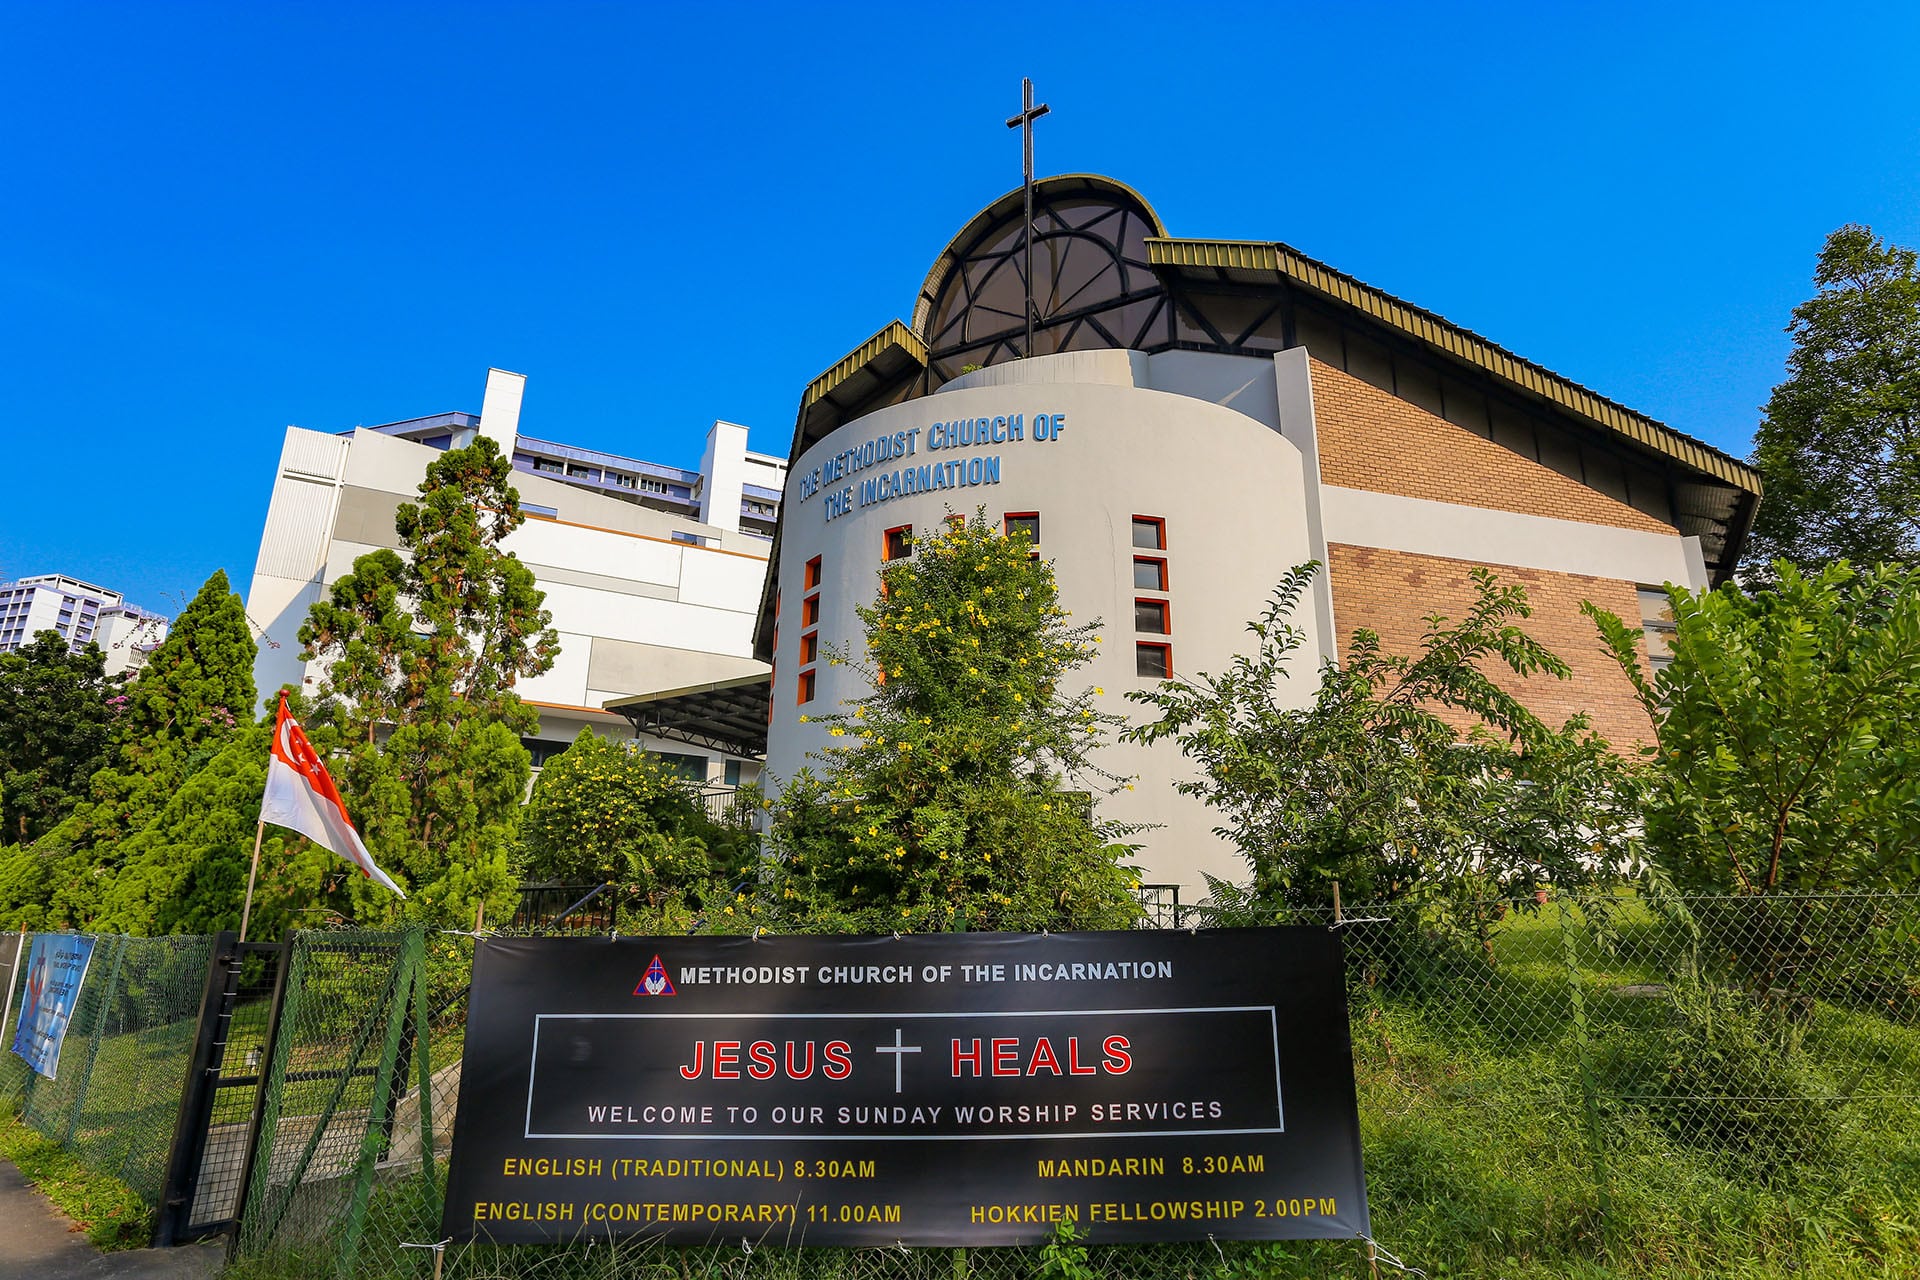 The Methodist Church of the Incarnation